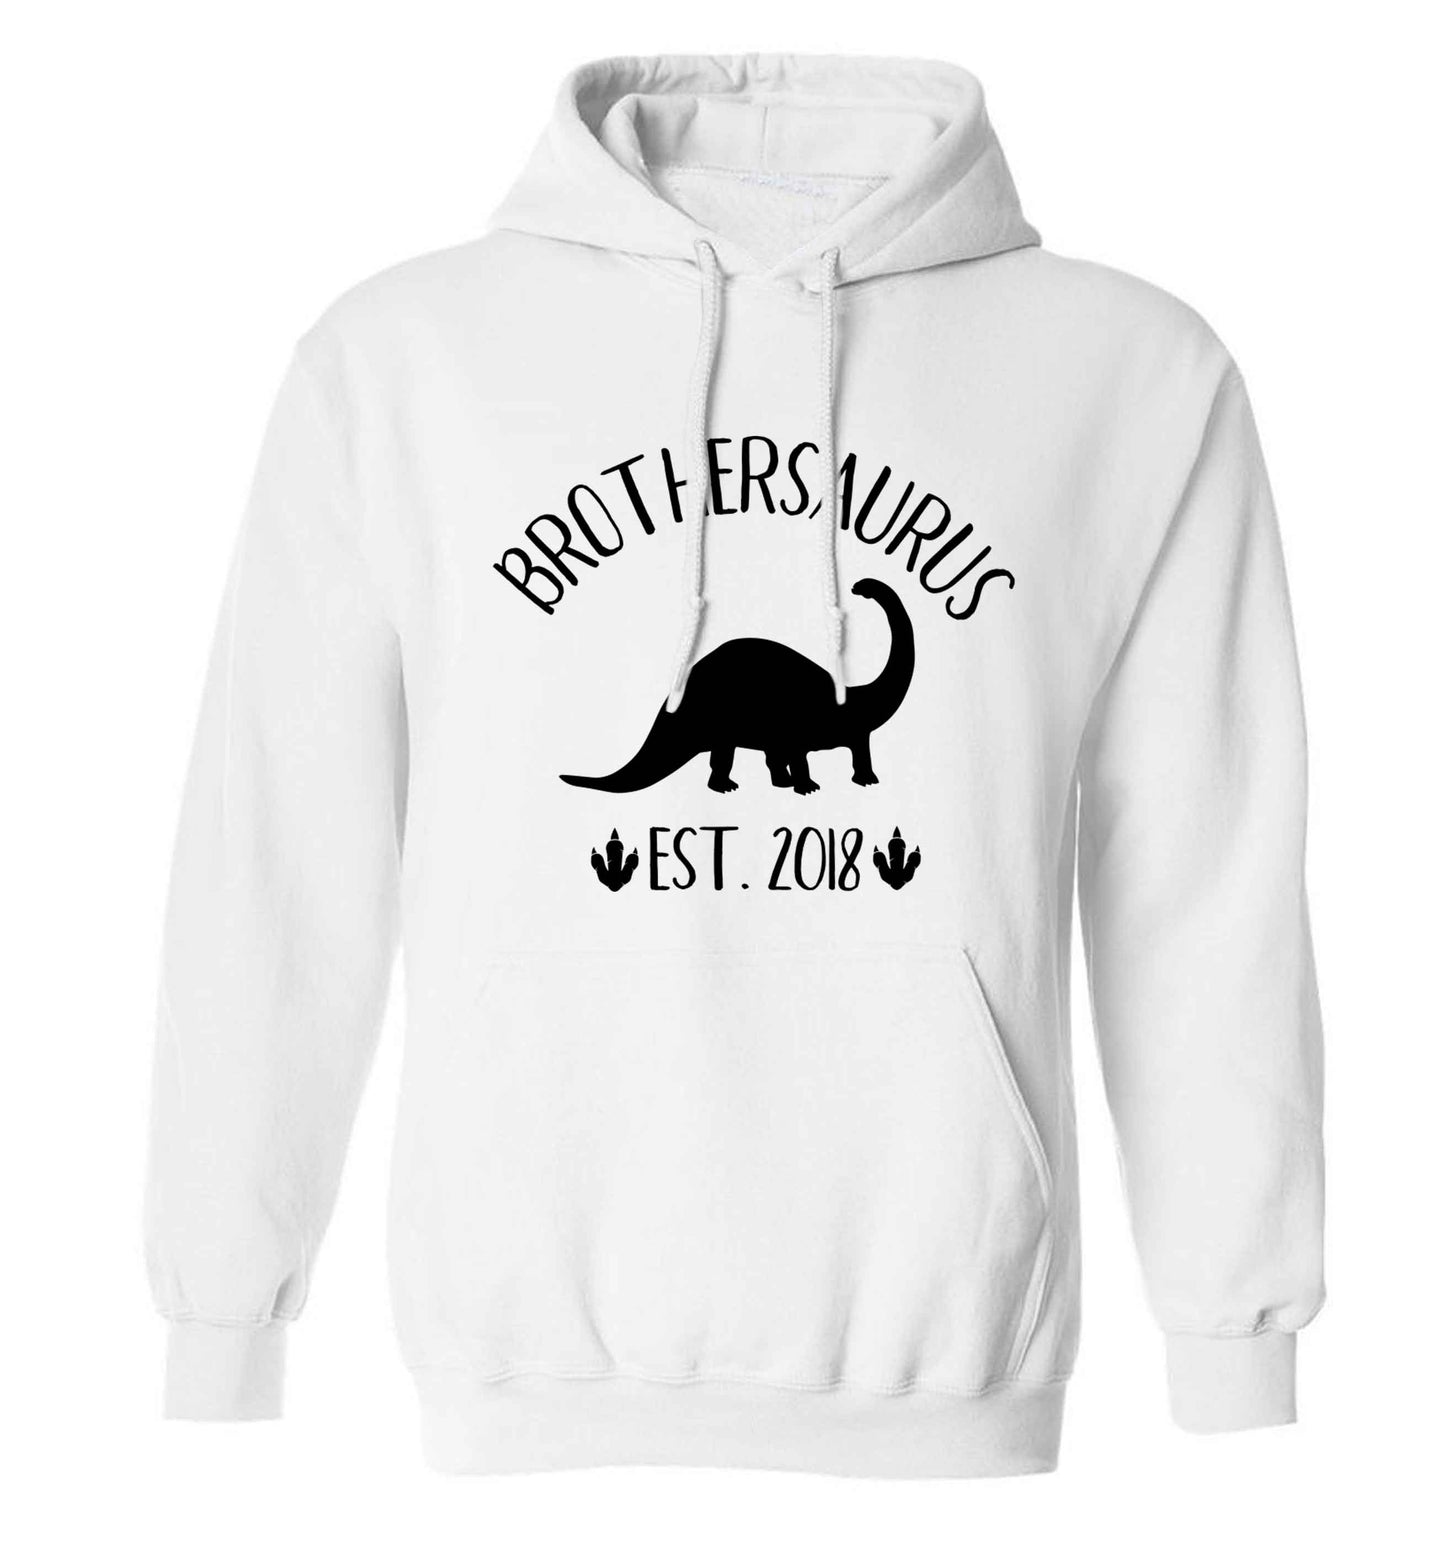 Personalised brothersaurus since (custom date) adults unisex white hoodie 2XL